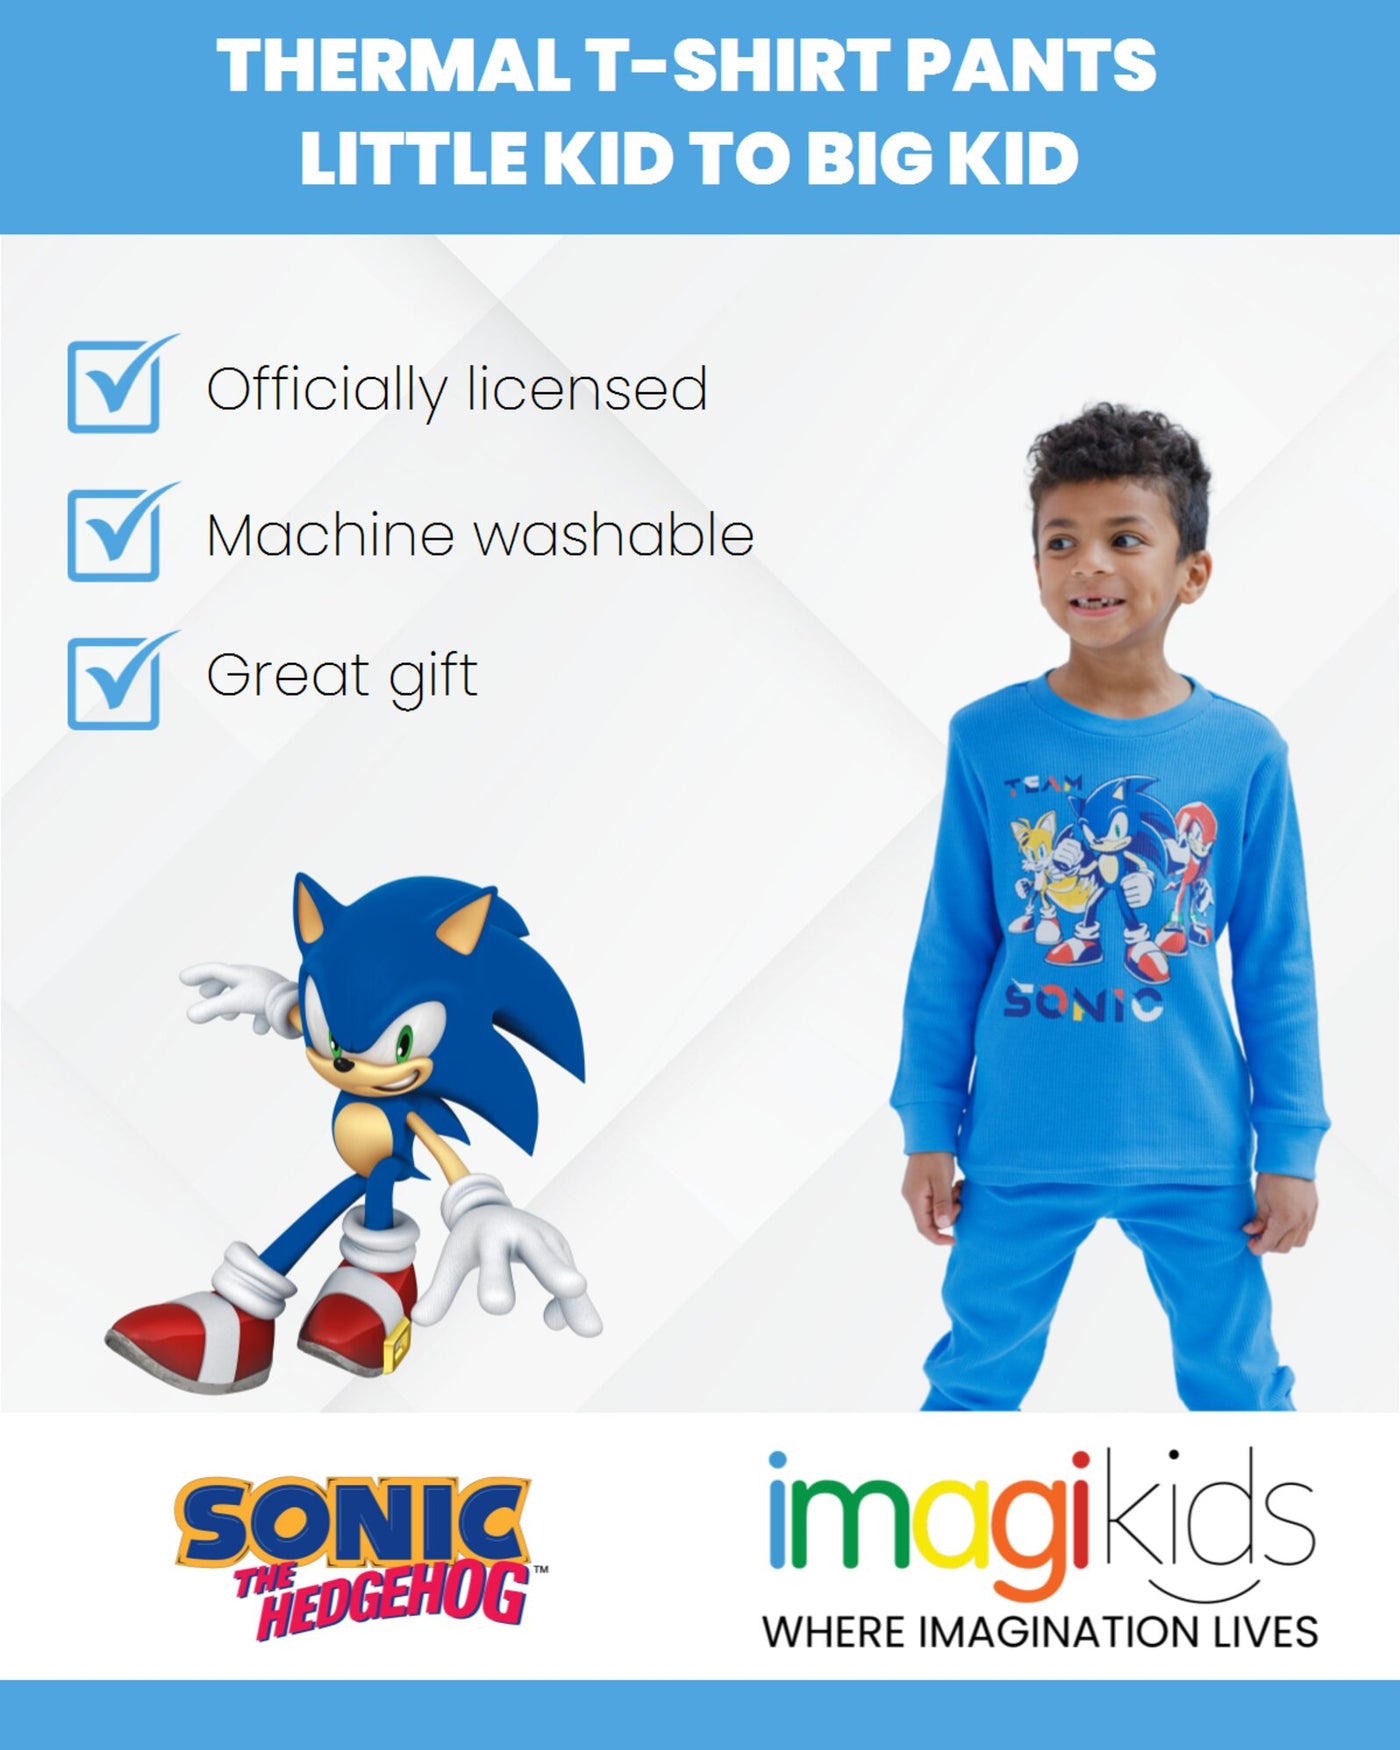 SEGA Sonic the Hedgehog Tails Knuckles Thermal T-Shirt Pants